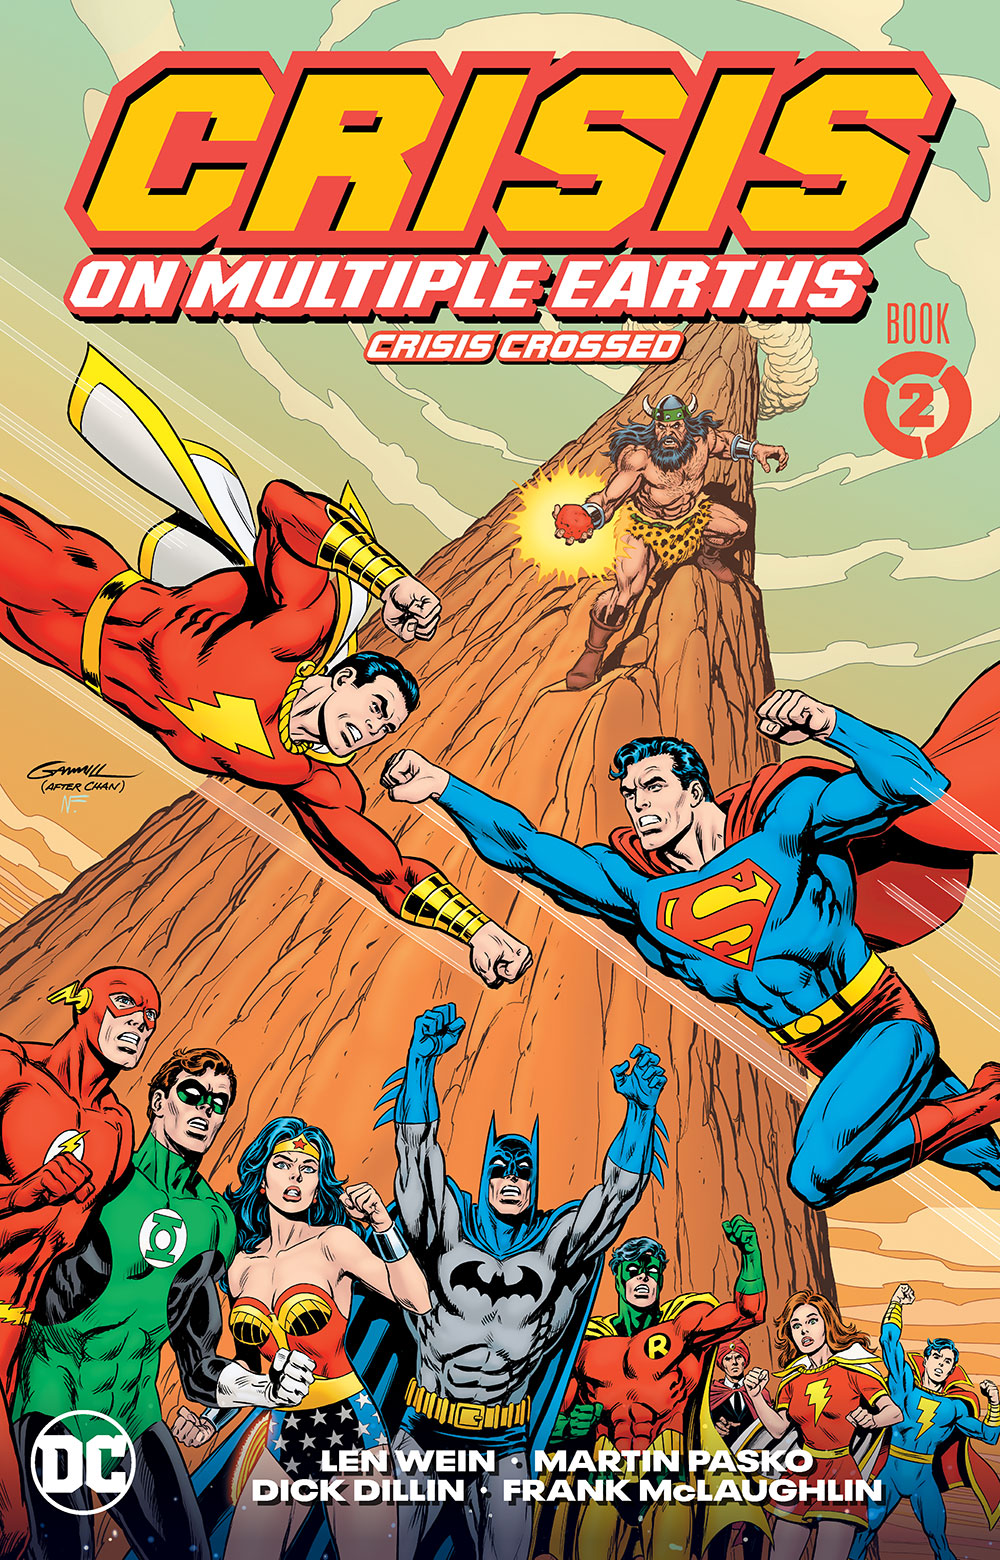 Crisis On Multiple Earths Graphic Novel Volume 2 Crisis Crossed